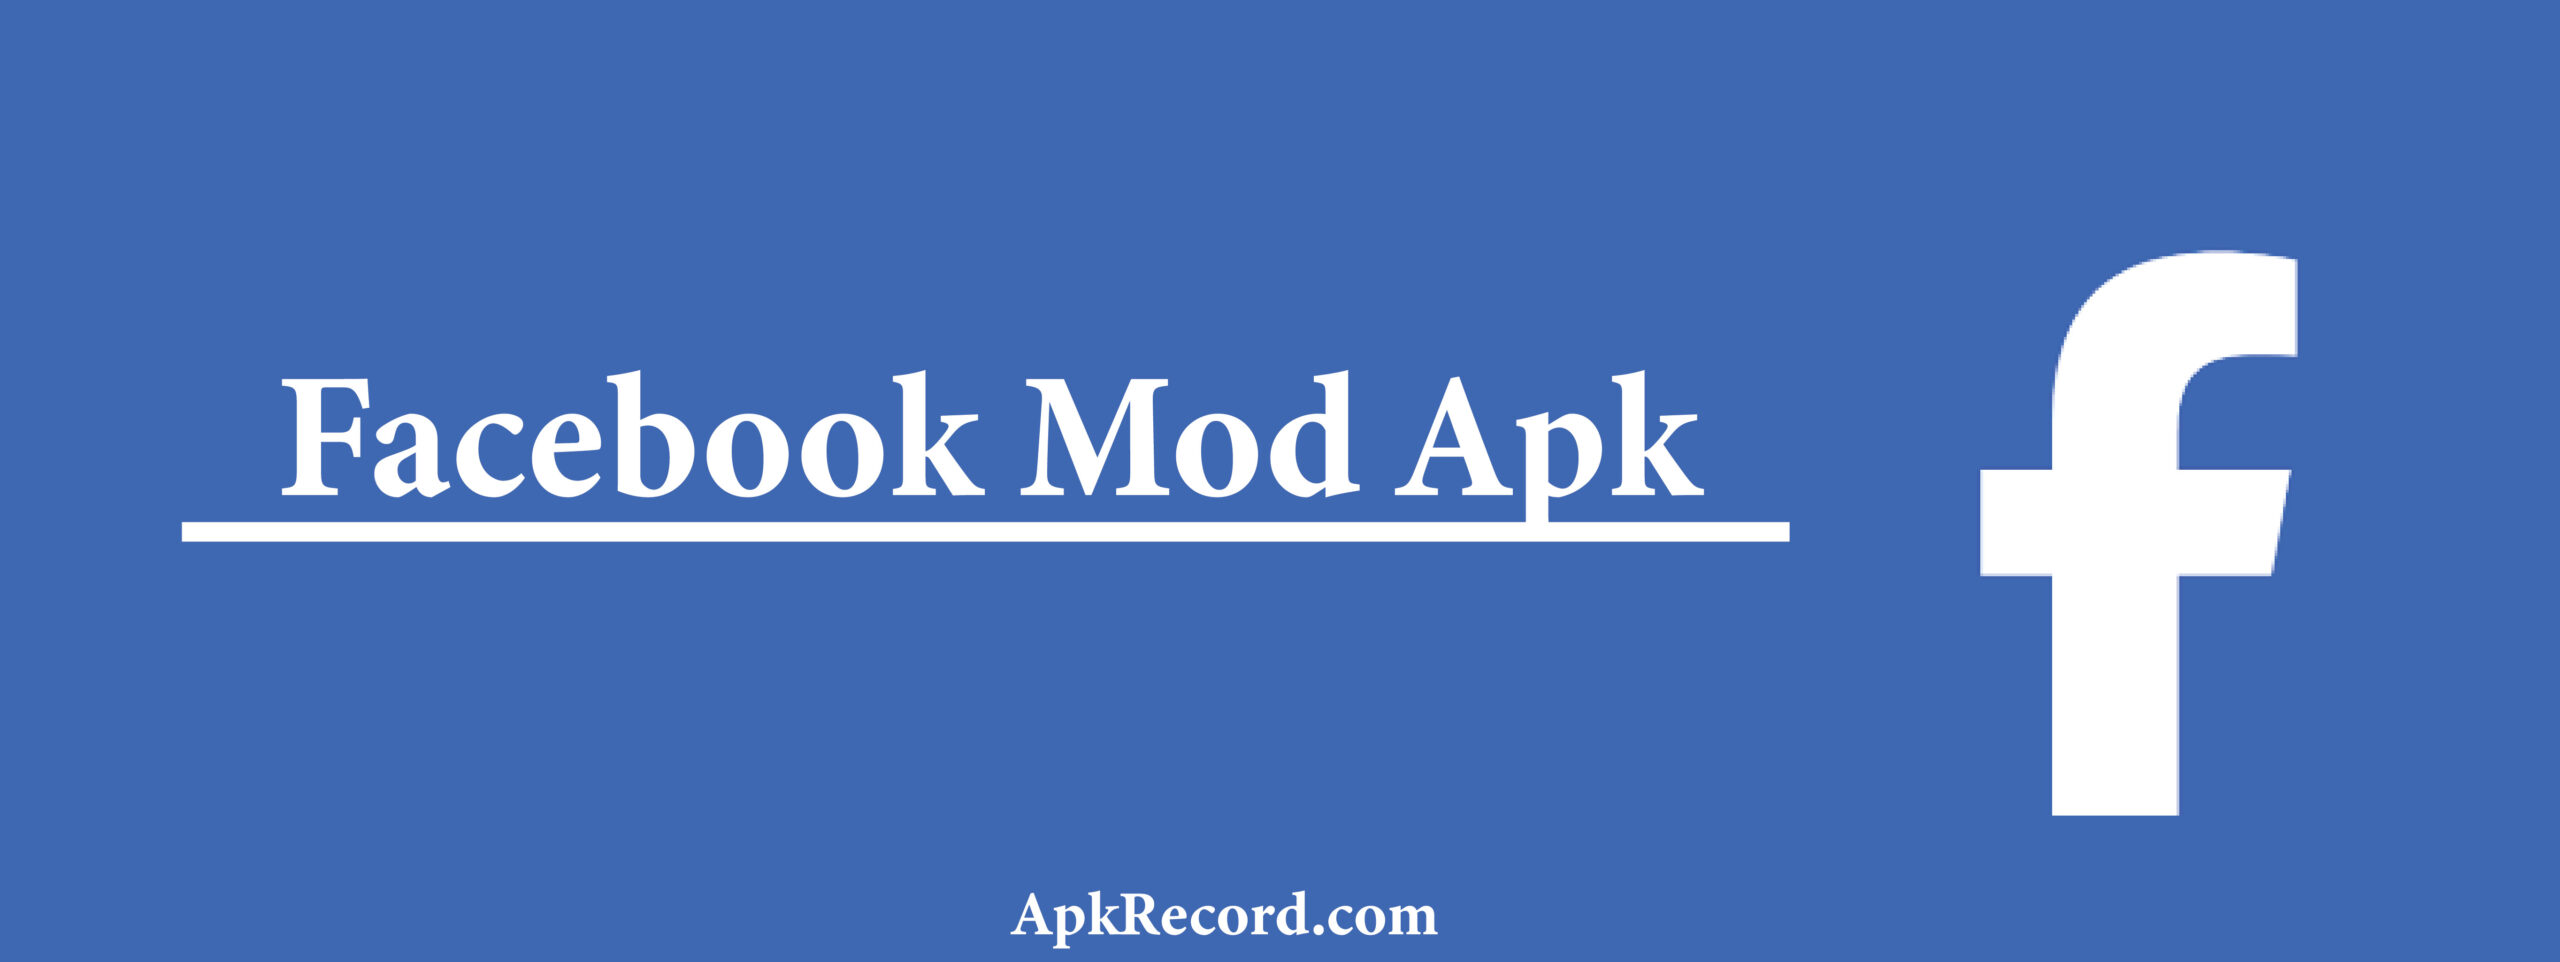 Facebook Mod Apk V445.0.0.0.34.118 